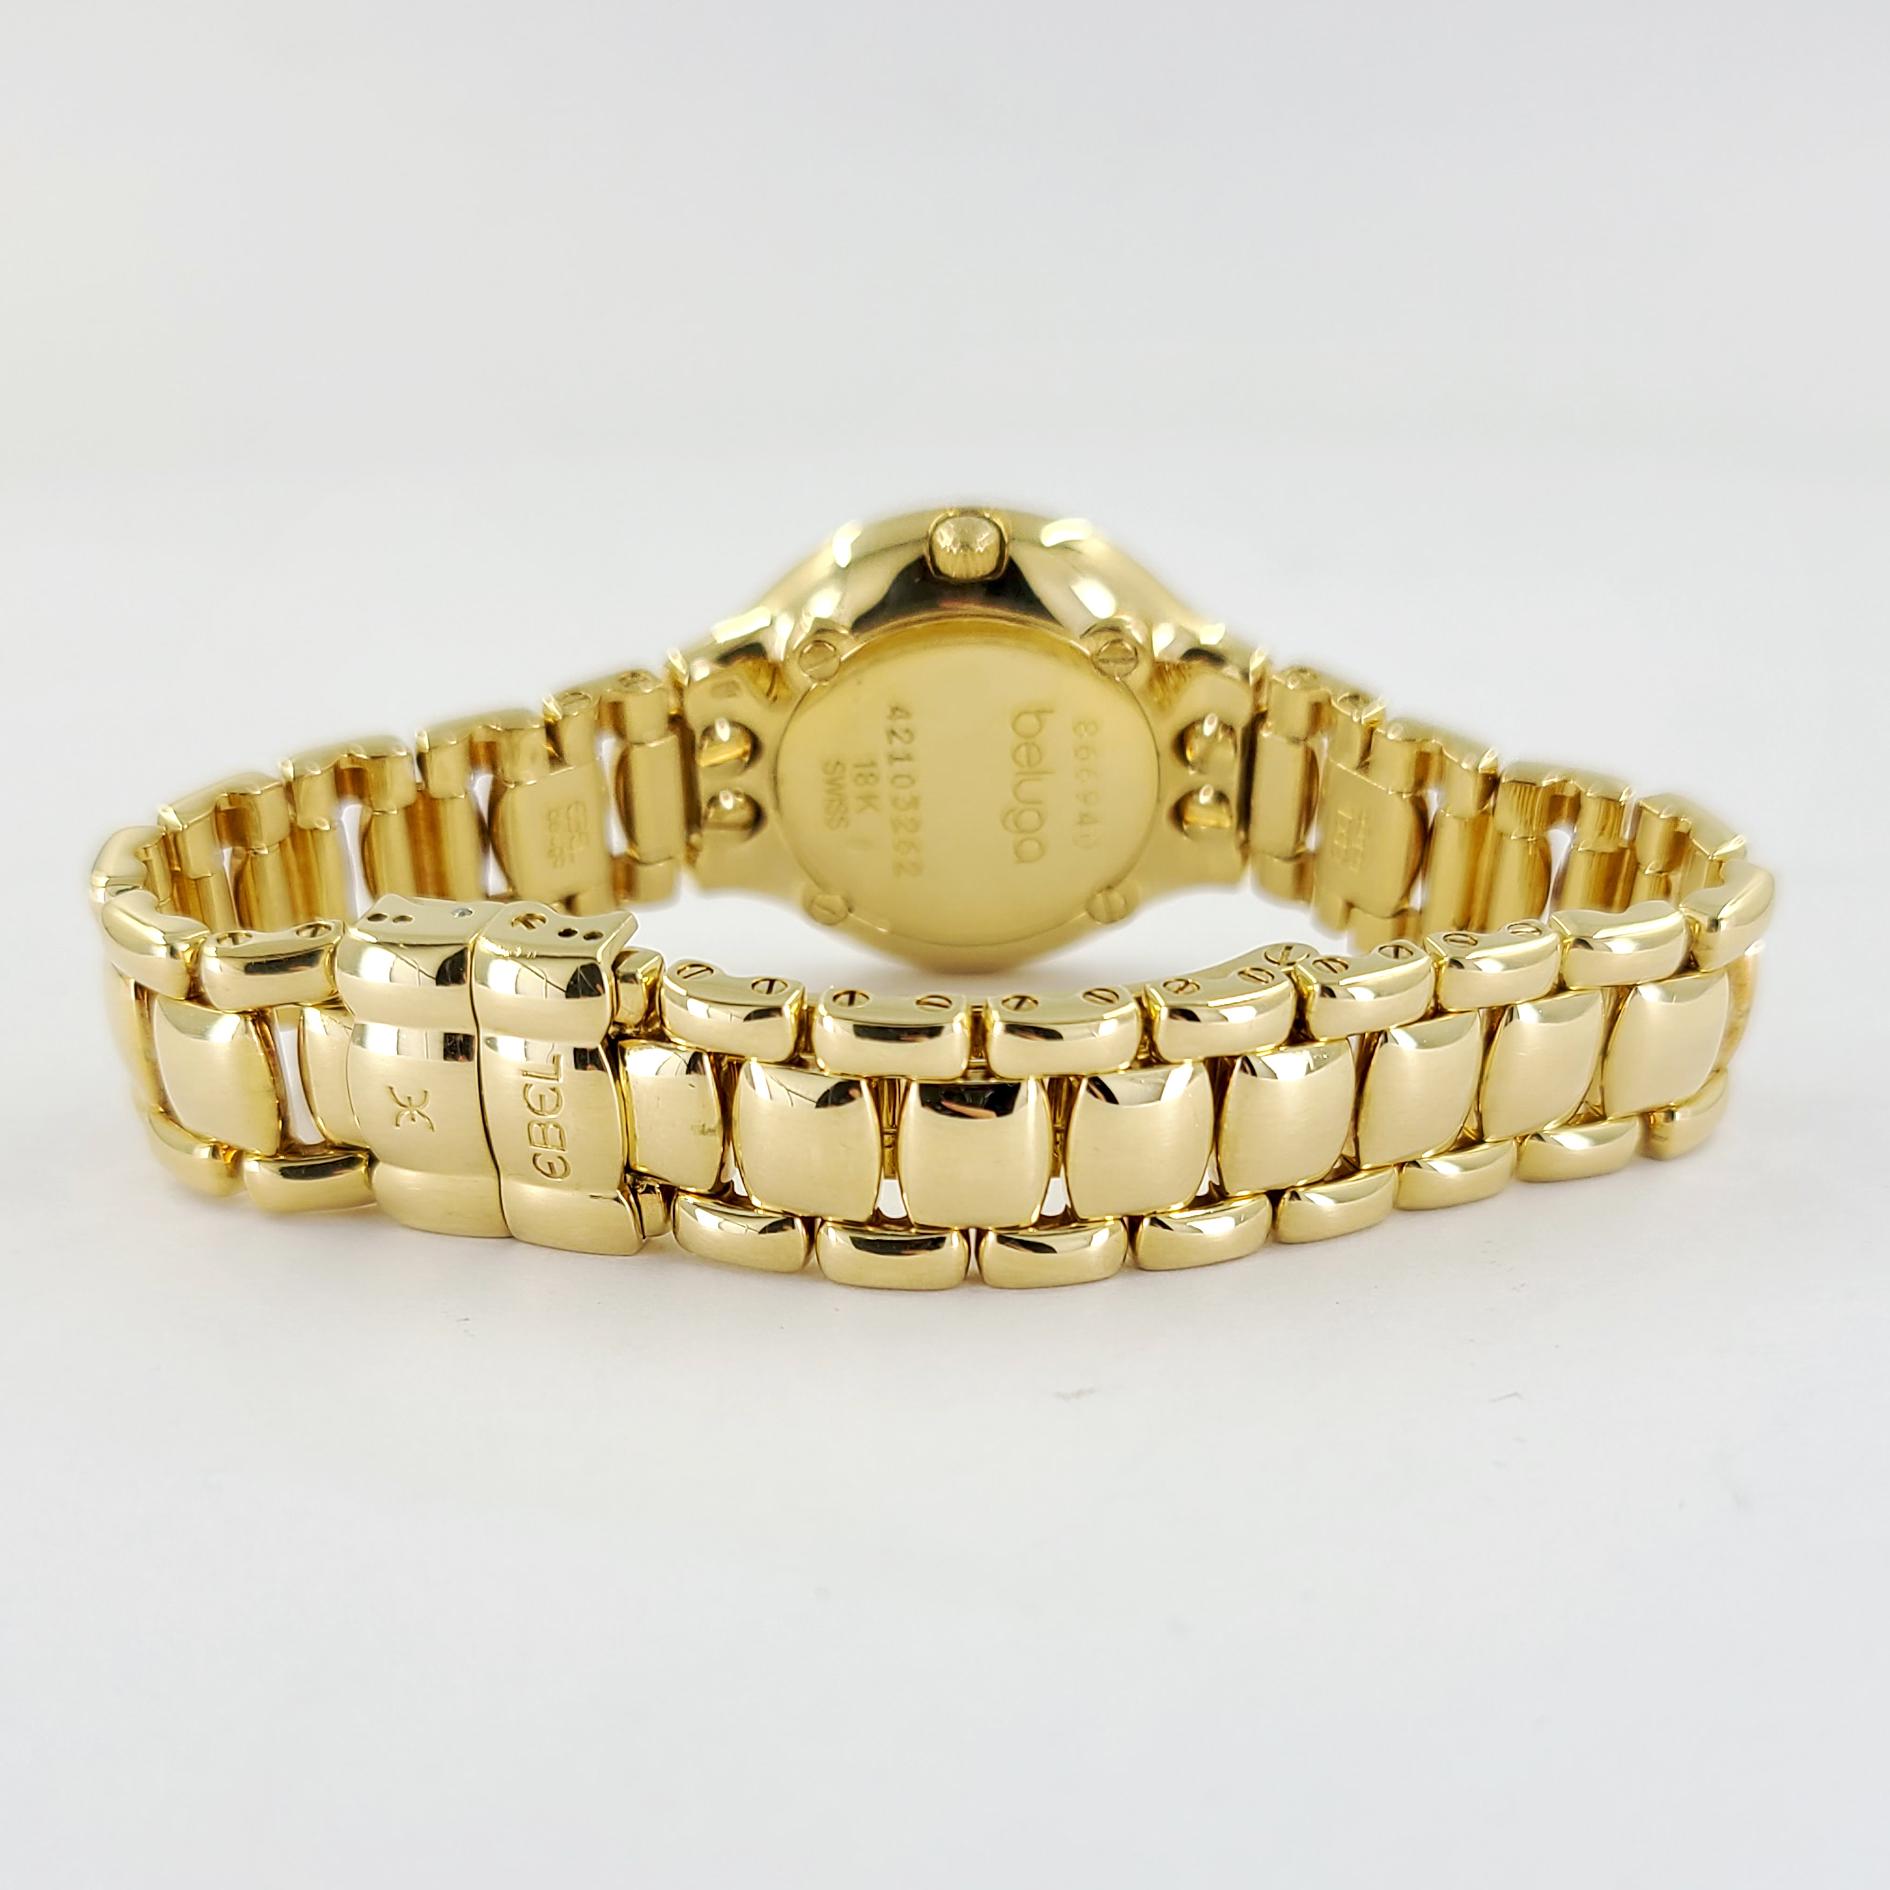 Round Cut Ebel 18 Karat Yellow Gold Lady's Beluga Wristwatch, Diamonds & Mother of Pearl